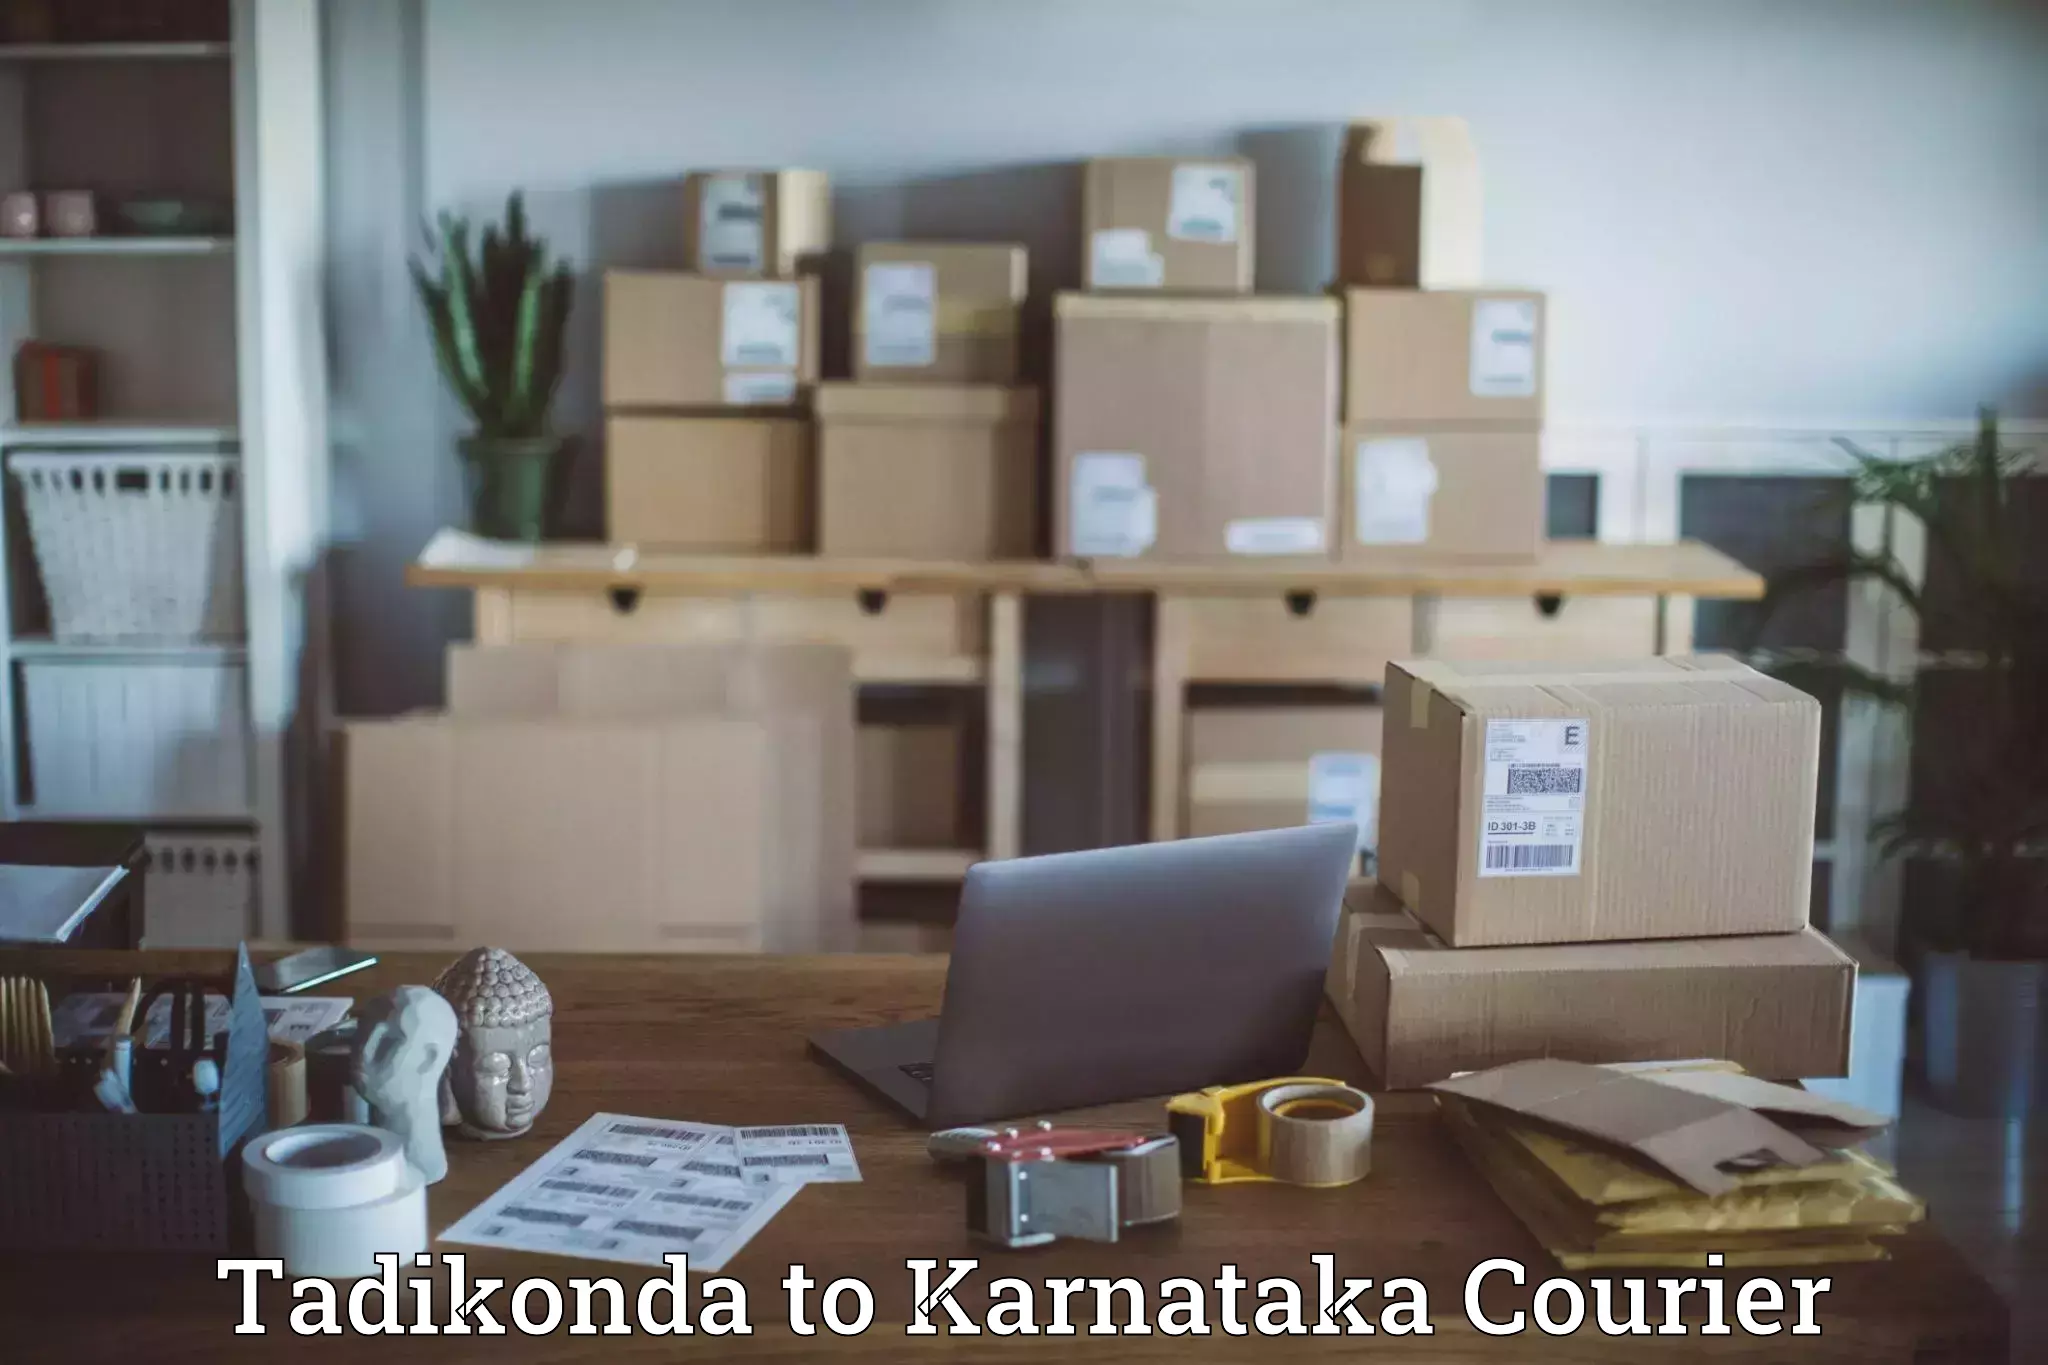 State-of-the-art courier technology Tadikonda to Uttara Kannada